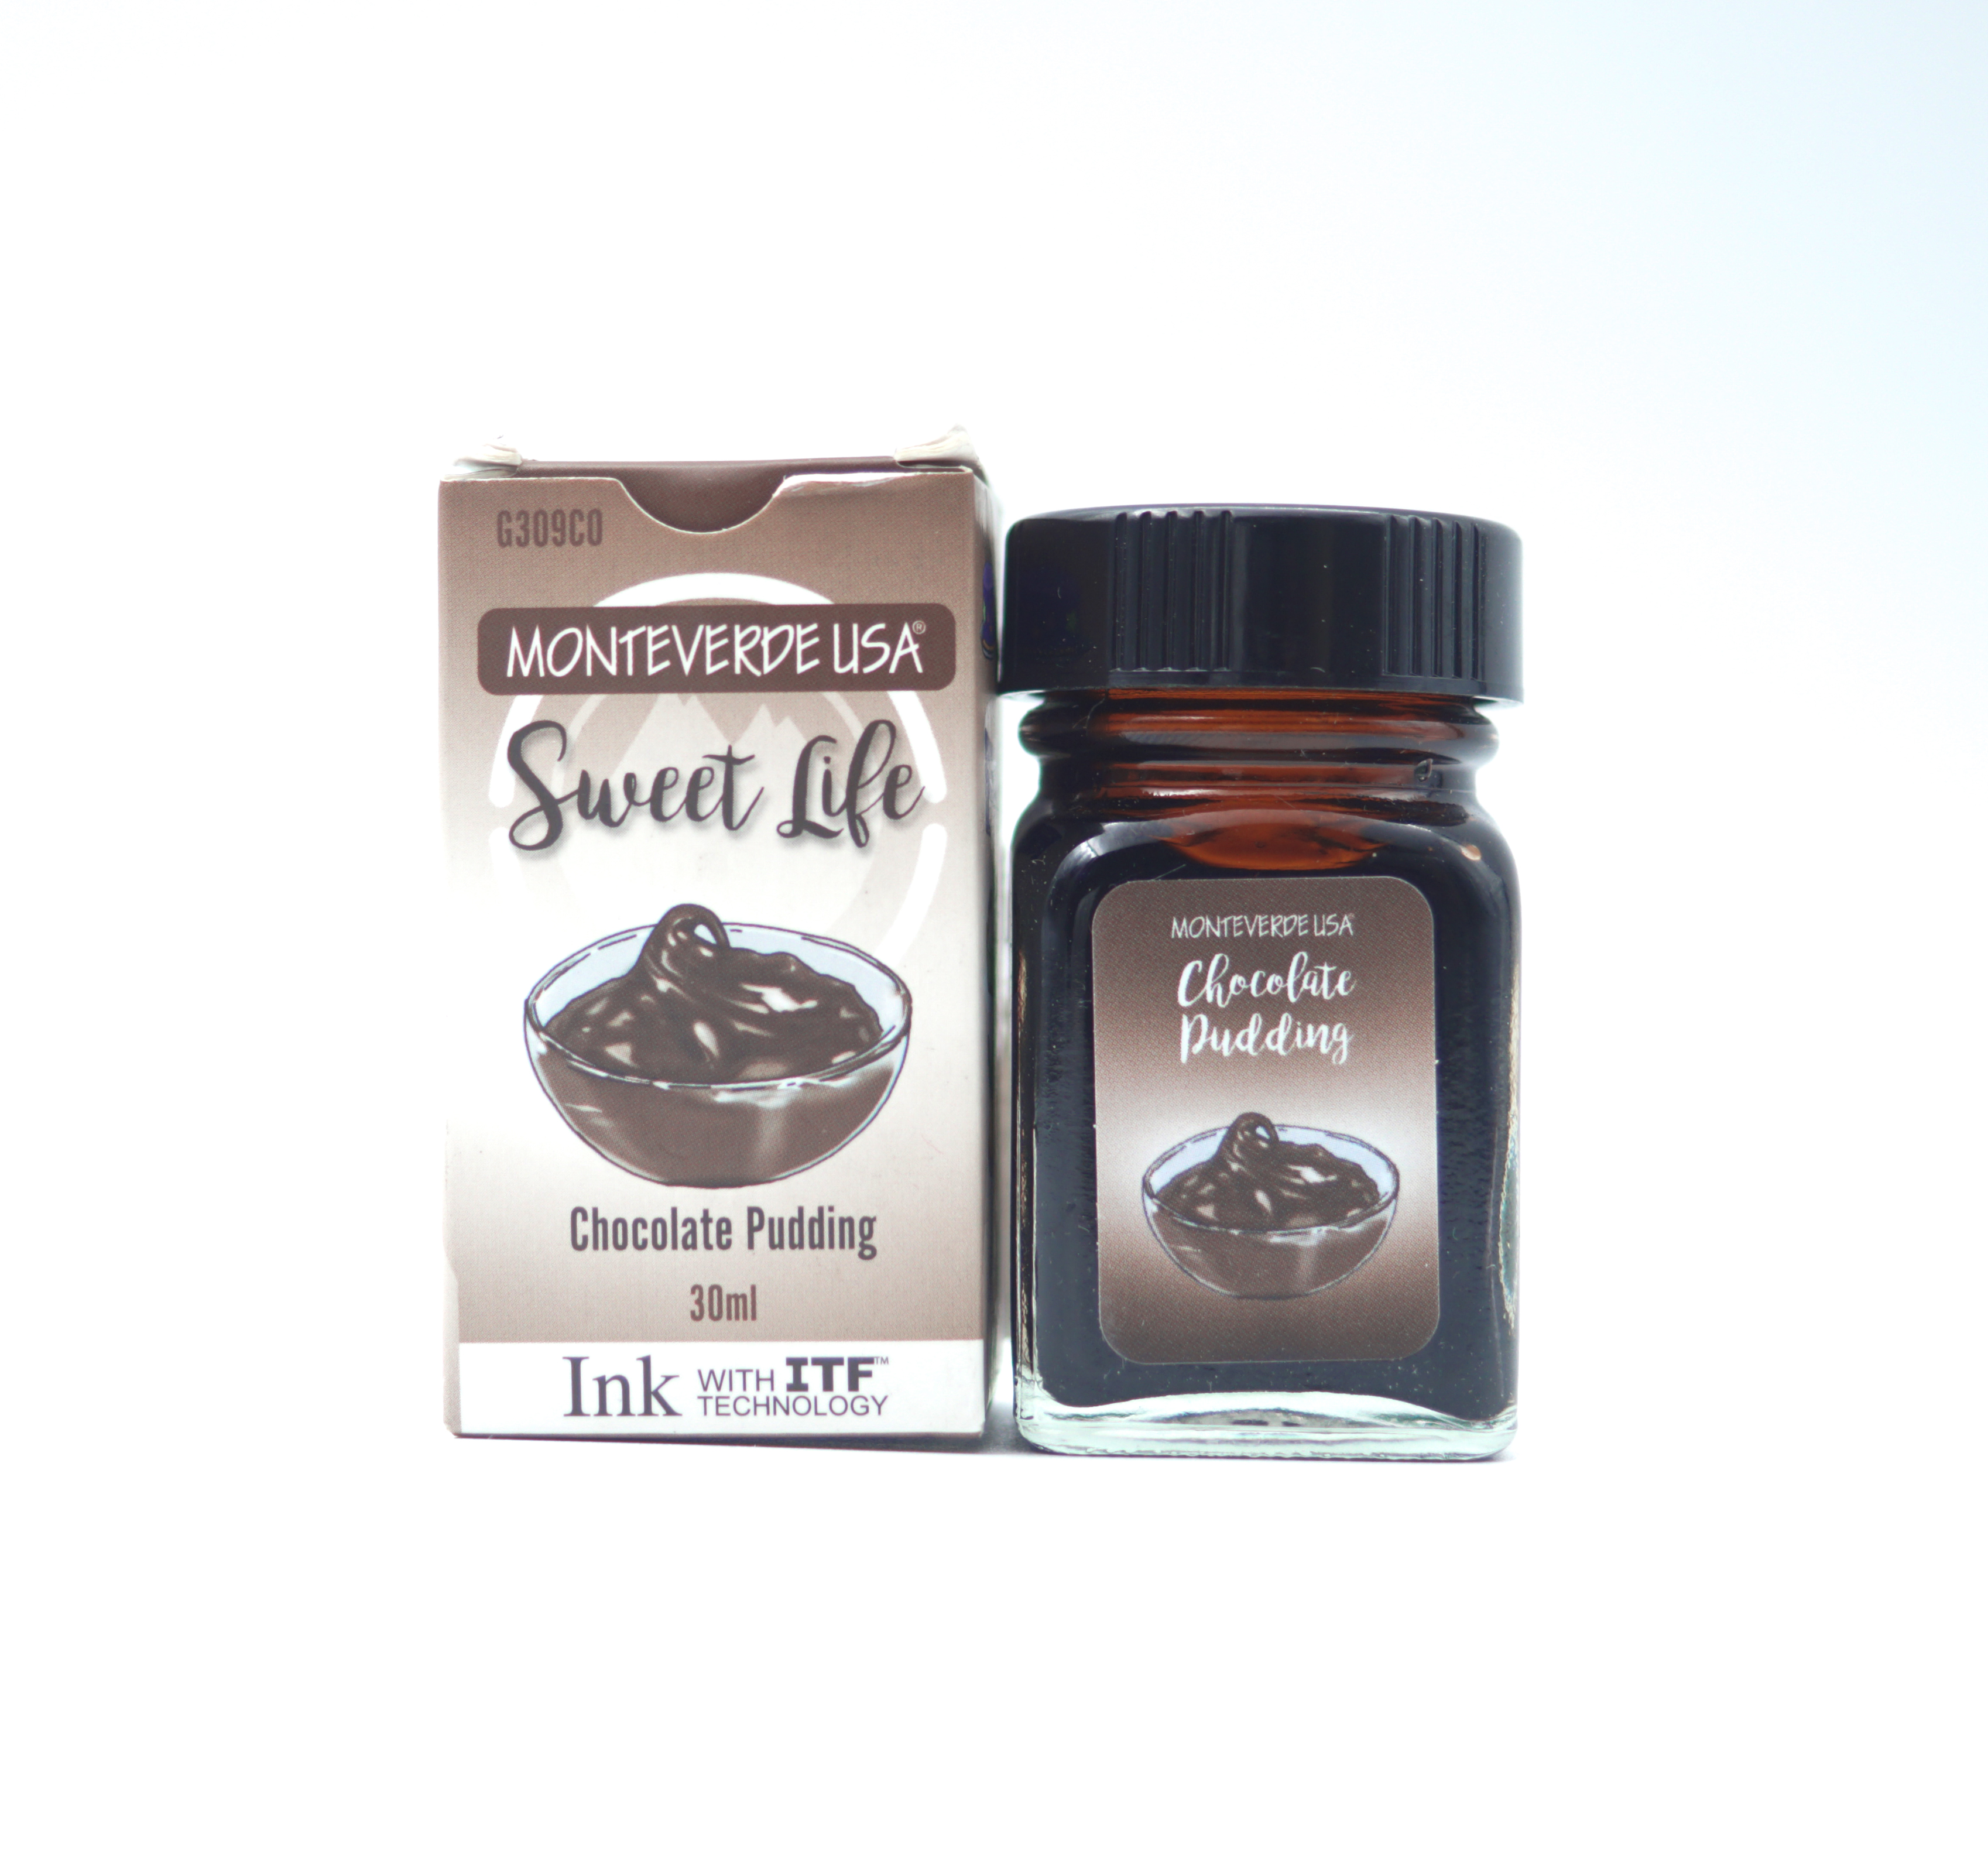 MONTEVERDE USA Sweet life Chocolate Pudding 30ml  Ink SKU 70842